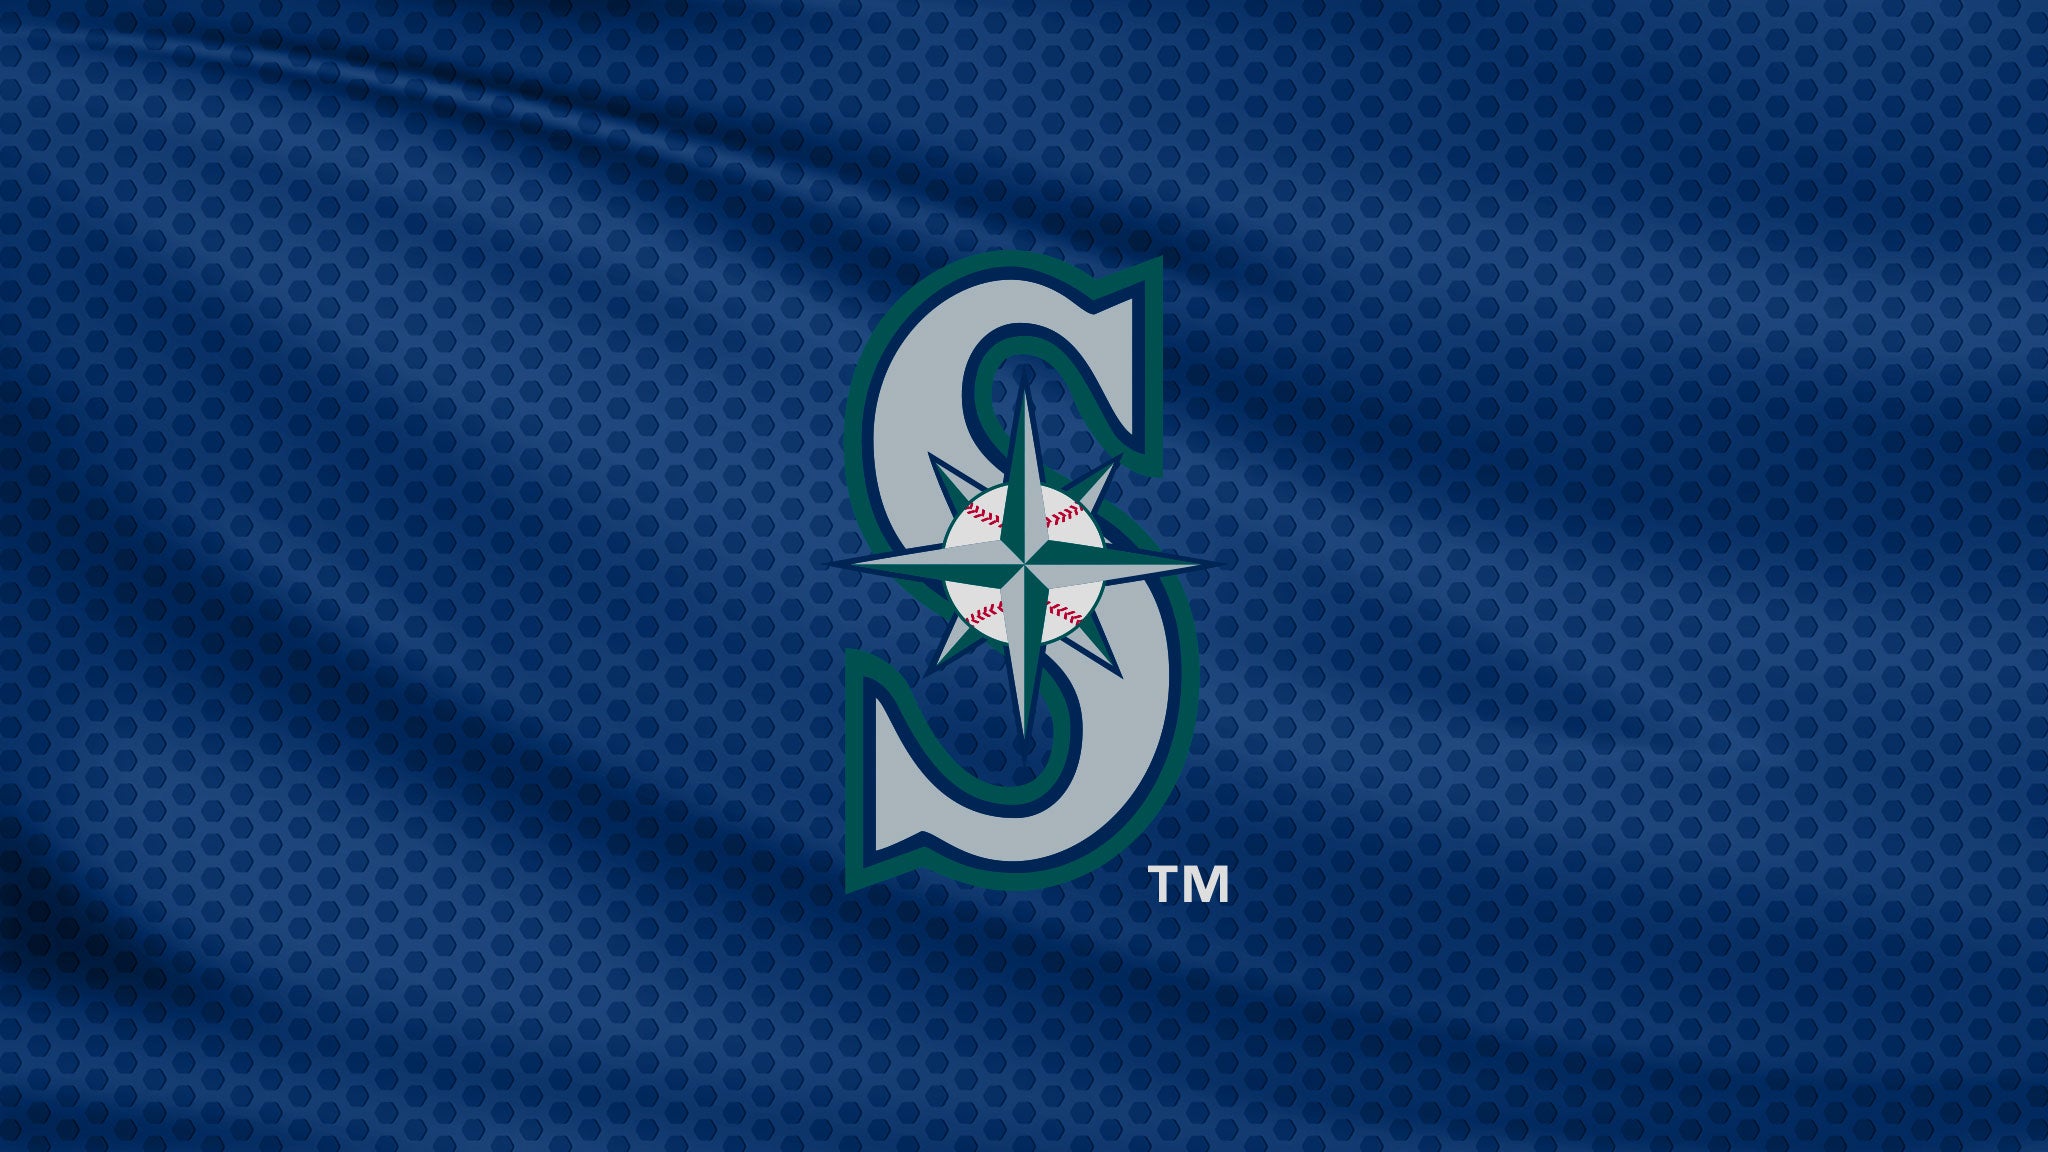 Seattle Mariners vs. Houston Astros presales in Seattle